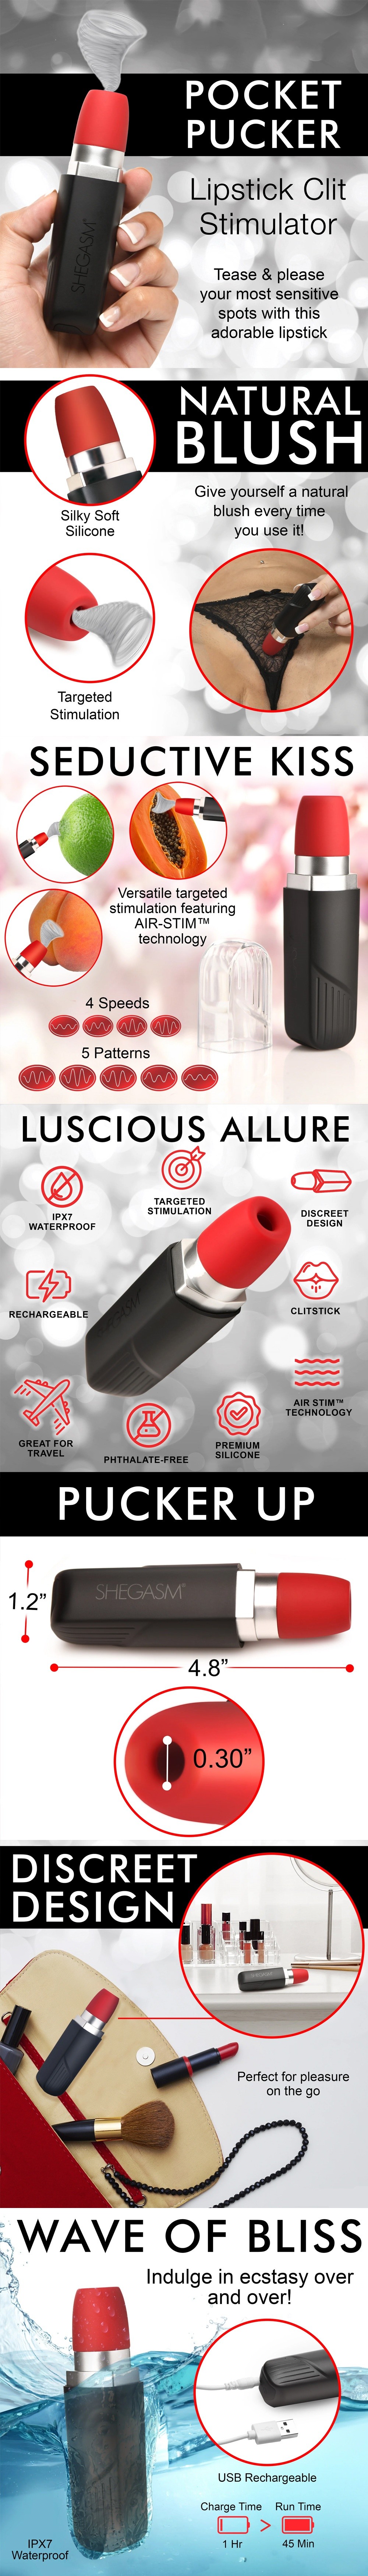 Pocket Pucker 10X Lipstick Air Clit Stimulator